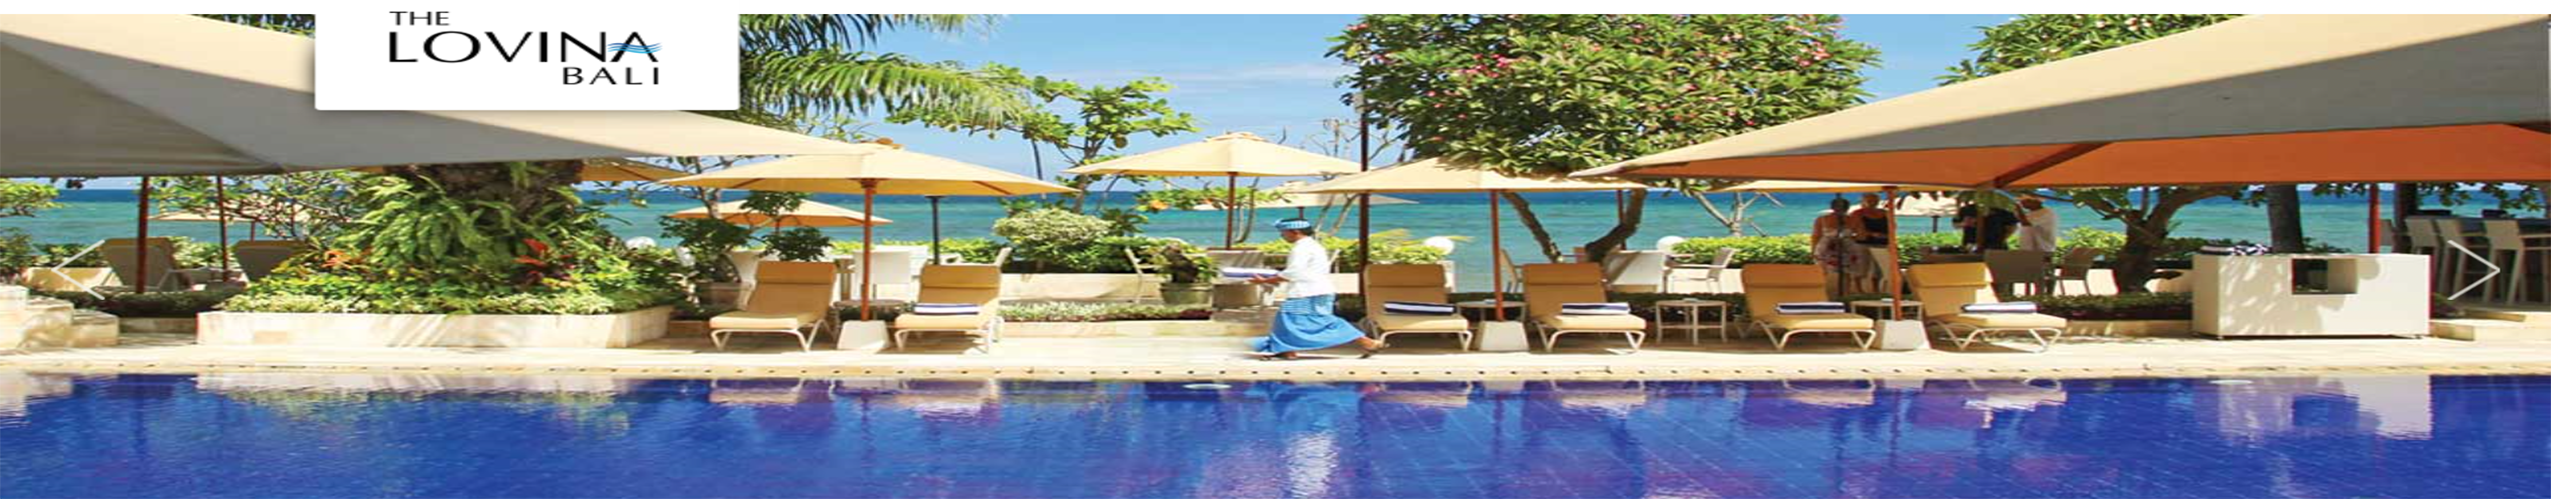 
The Lovina Bali Resort